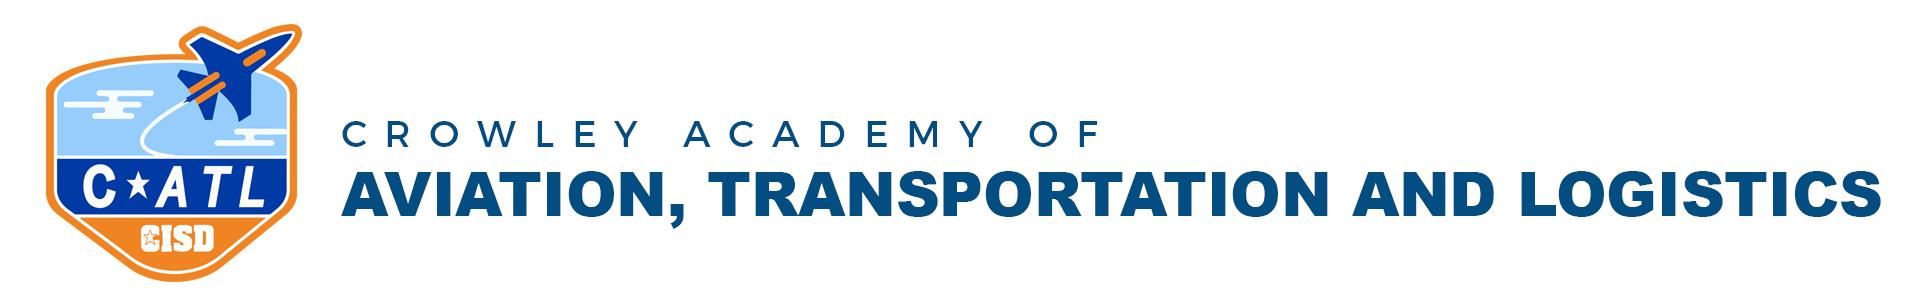 Crowley Academy of Aviation, Transportation and Logistics  